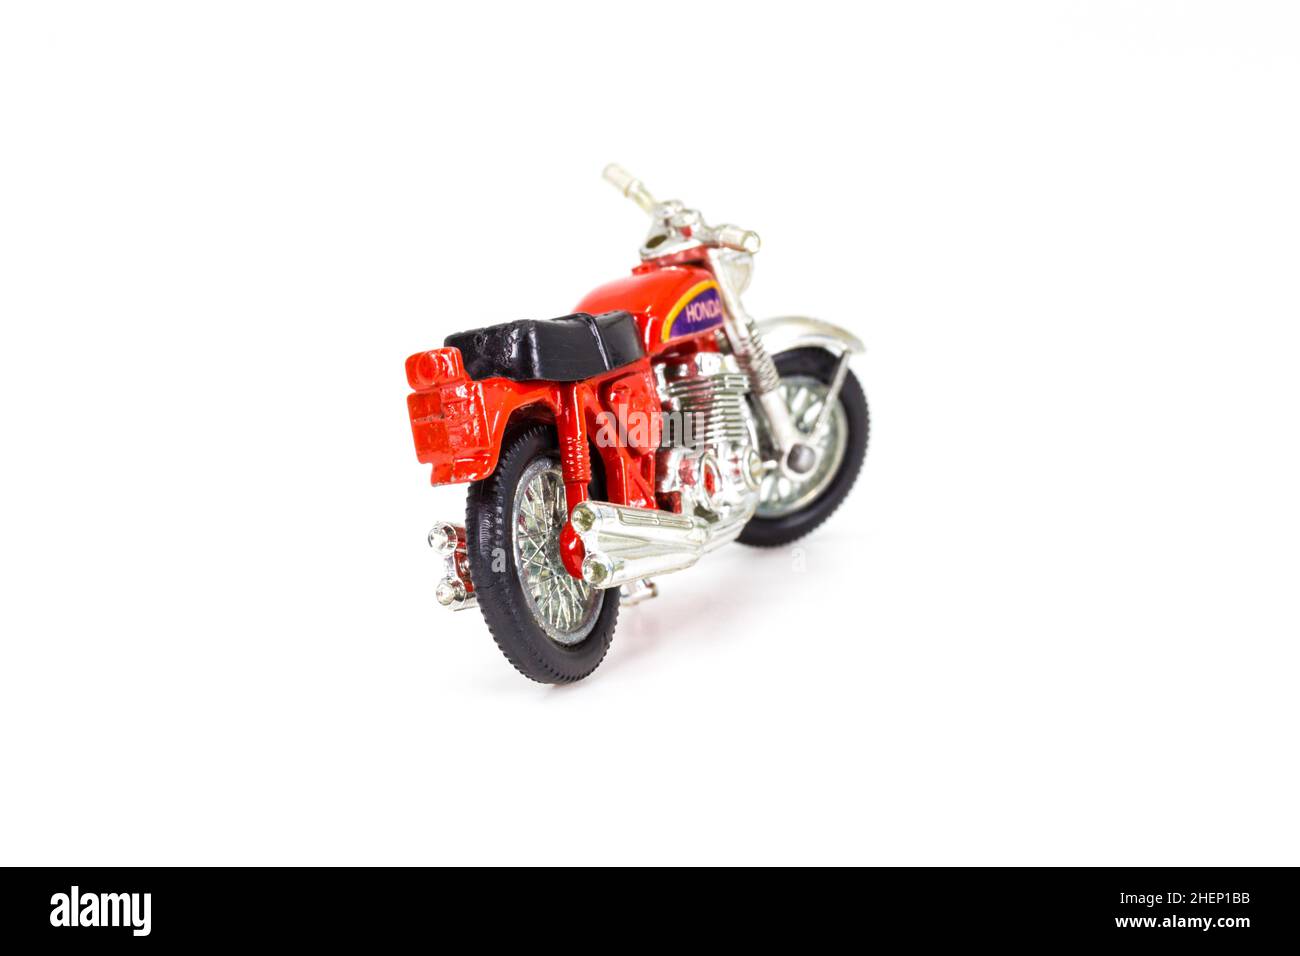 Lesney Products Matchbox model toy car 1-75 series no. 18 Hondarora (Honda motorcycle) Stock Photo